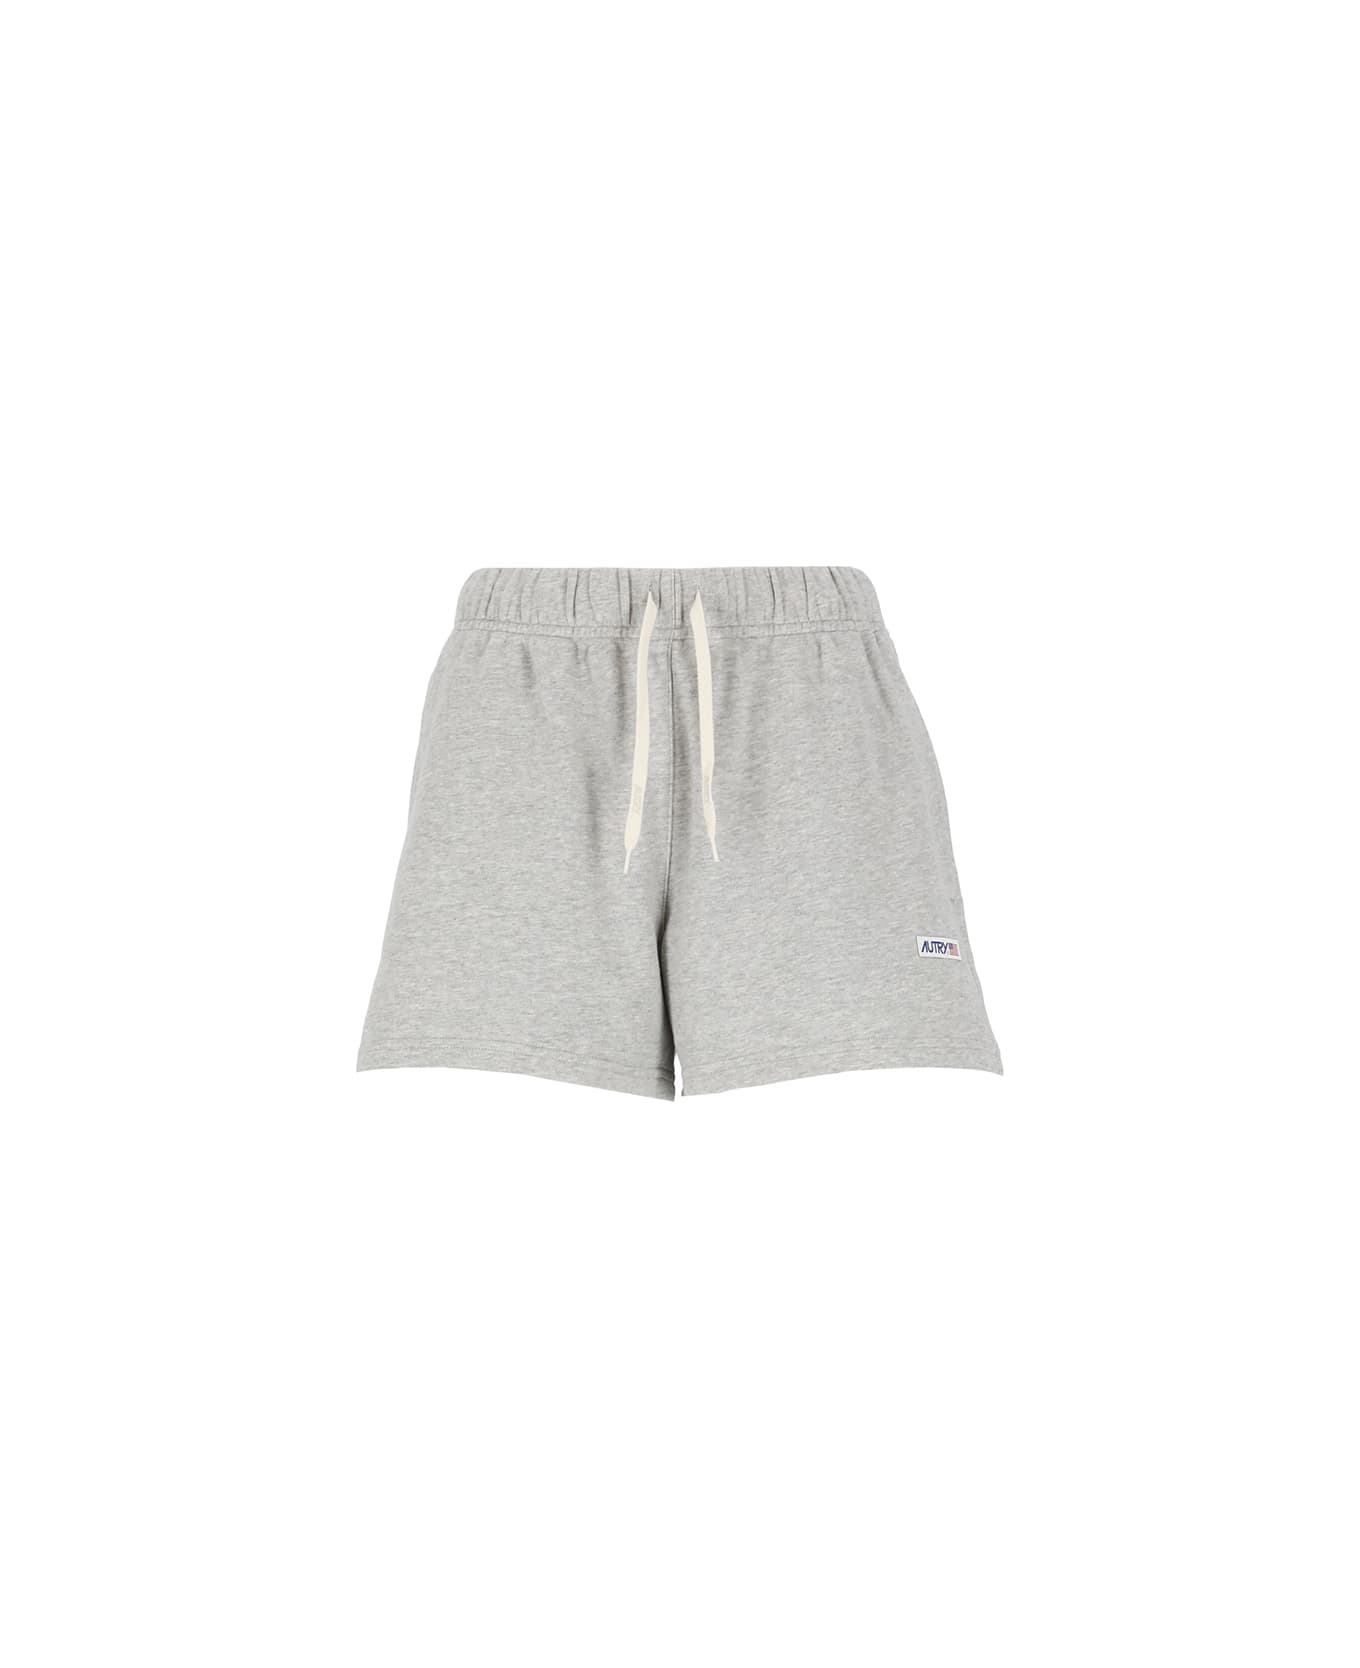 Autry Logoed Shorts - Grey